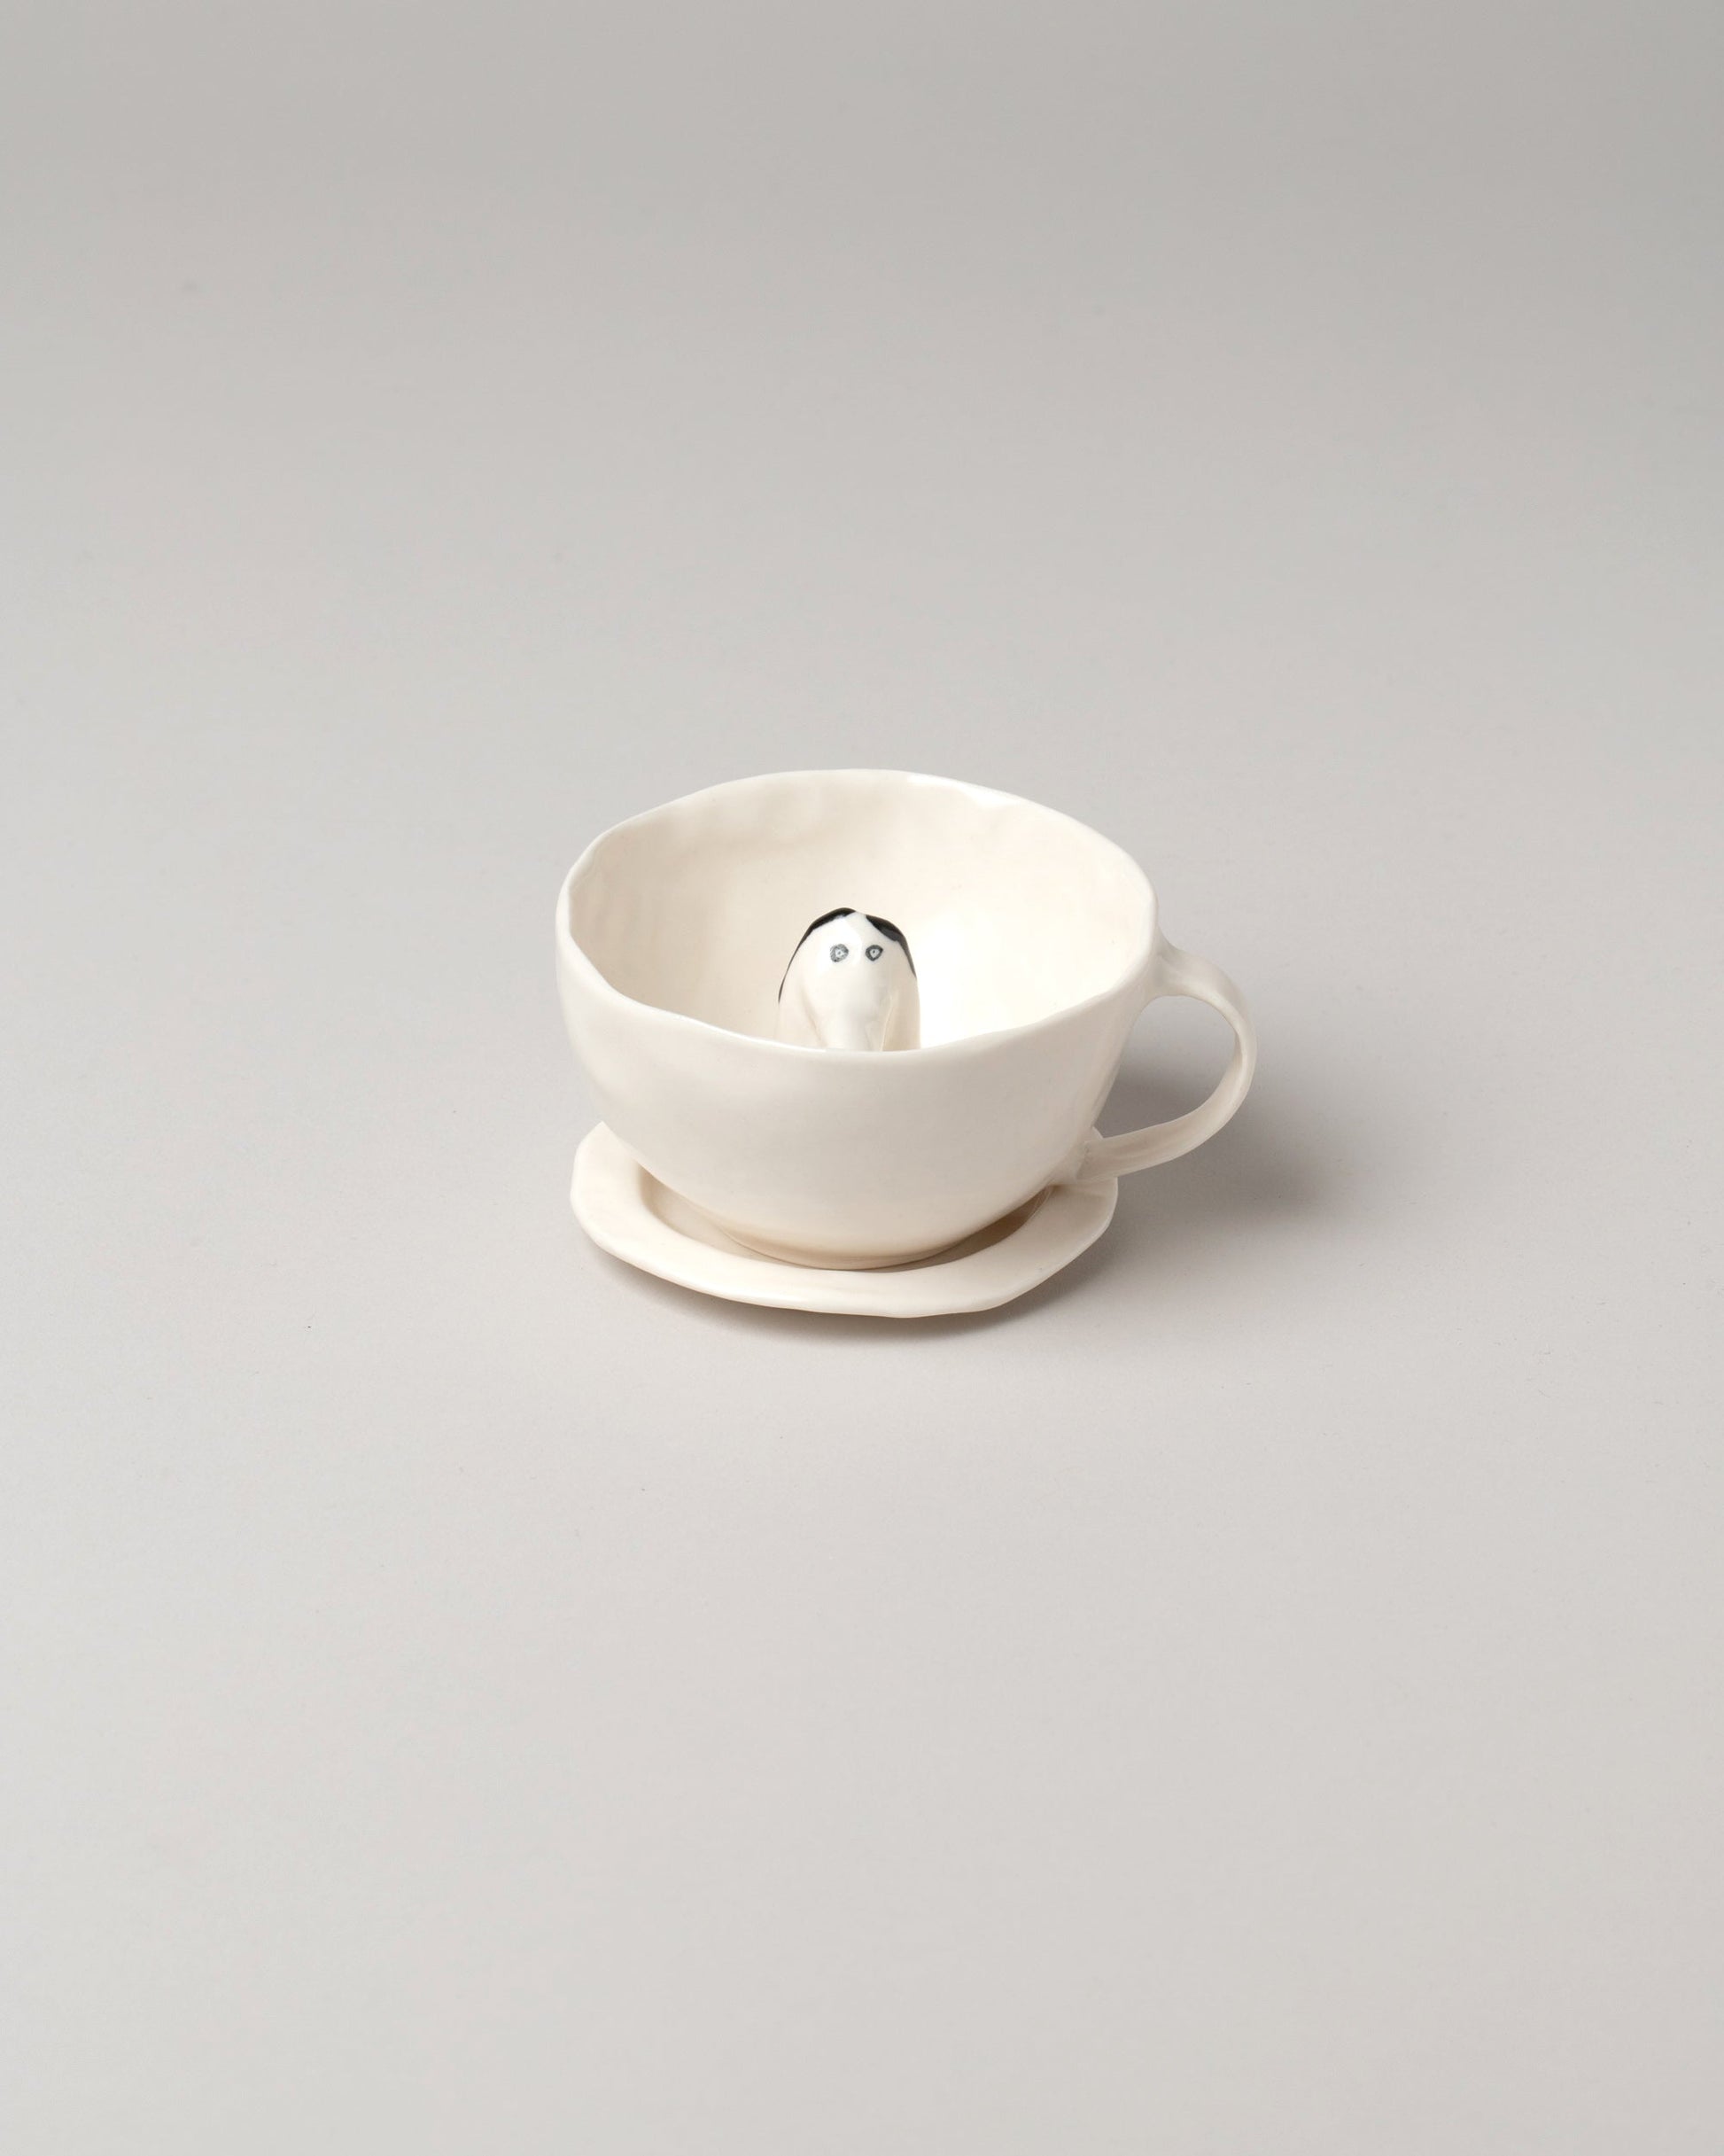 Eleonor Boström Dog Tea Cup & Saucer on light color background.